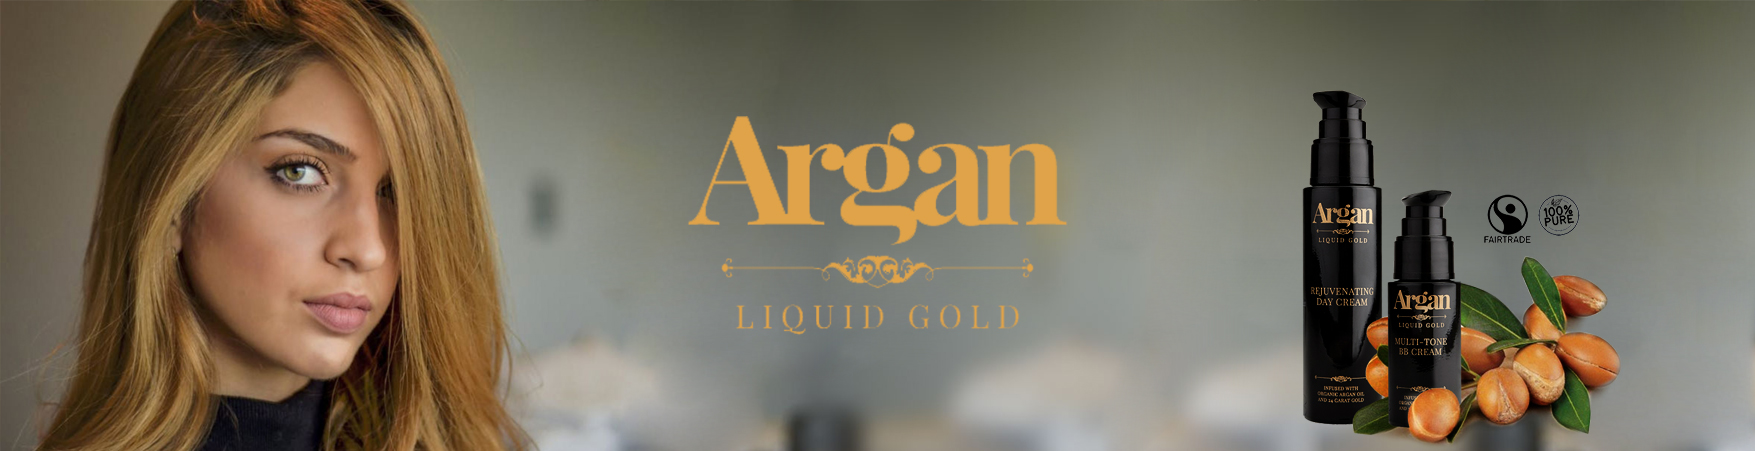 Argan Liquid Gold